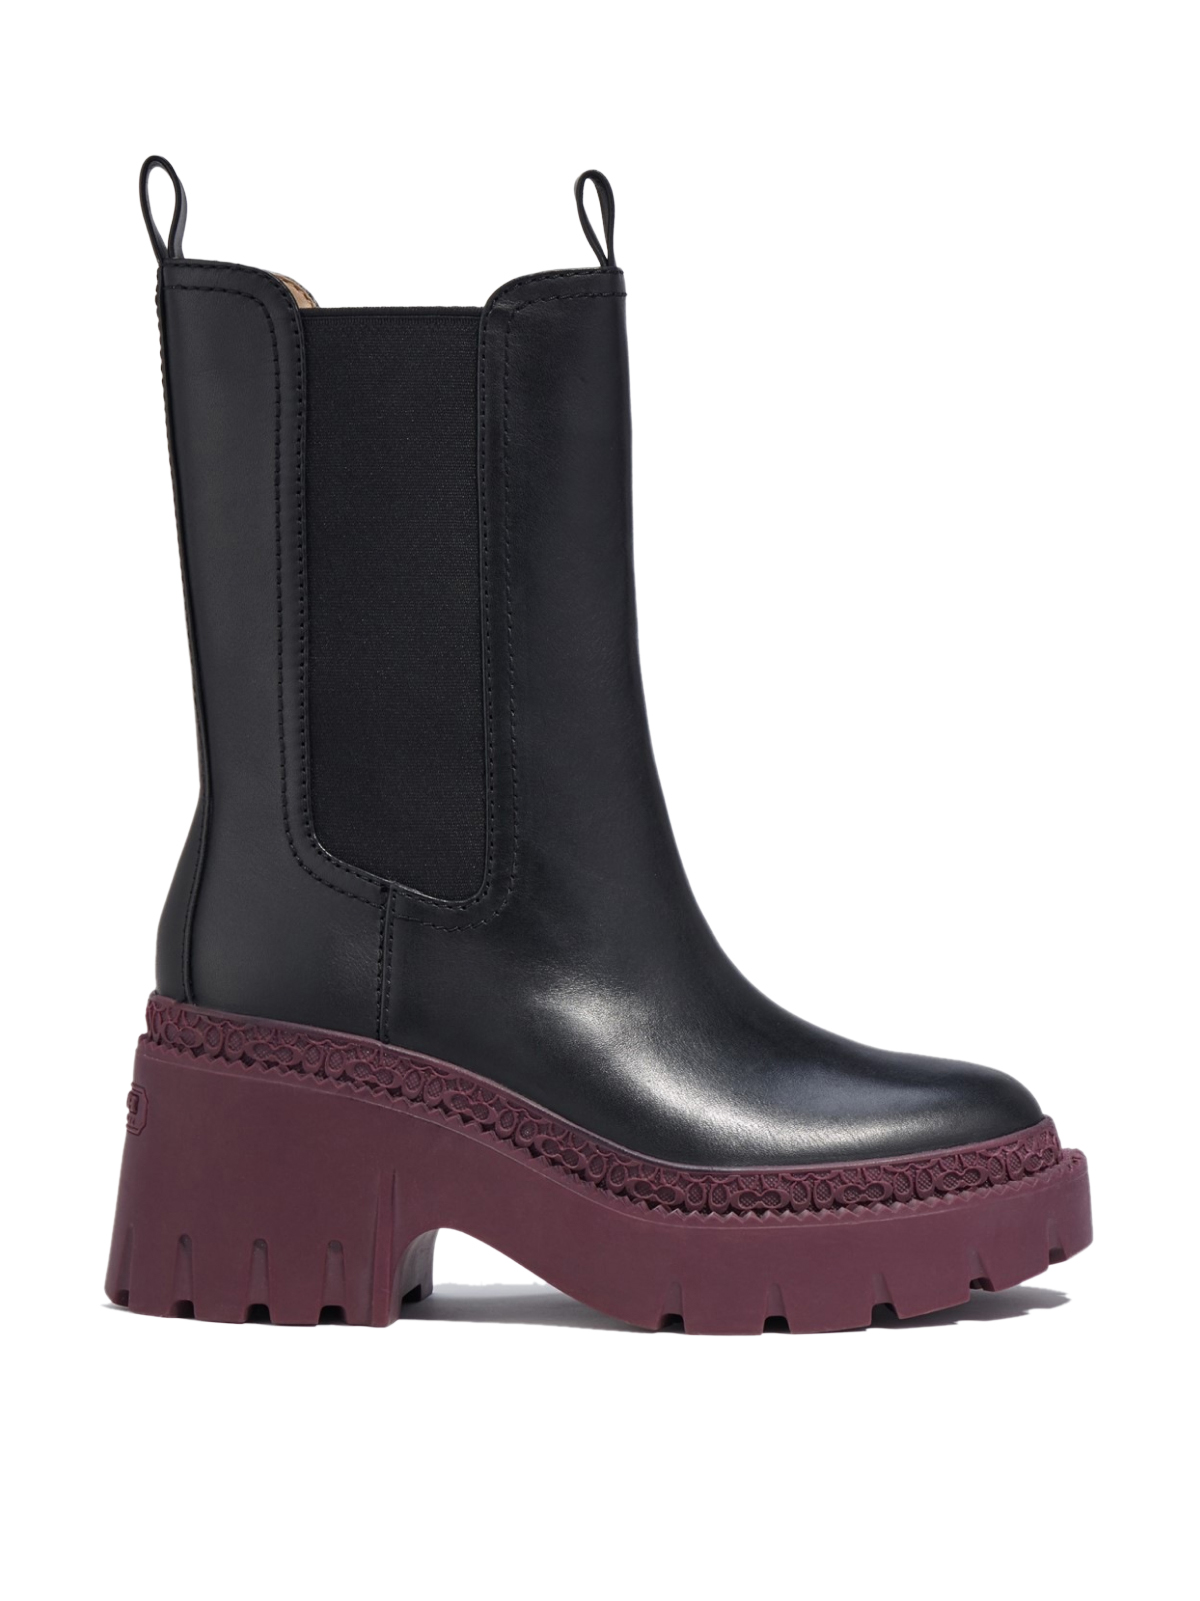 Alexa Leather Boots